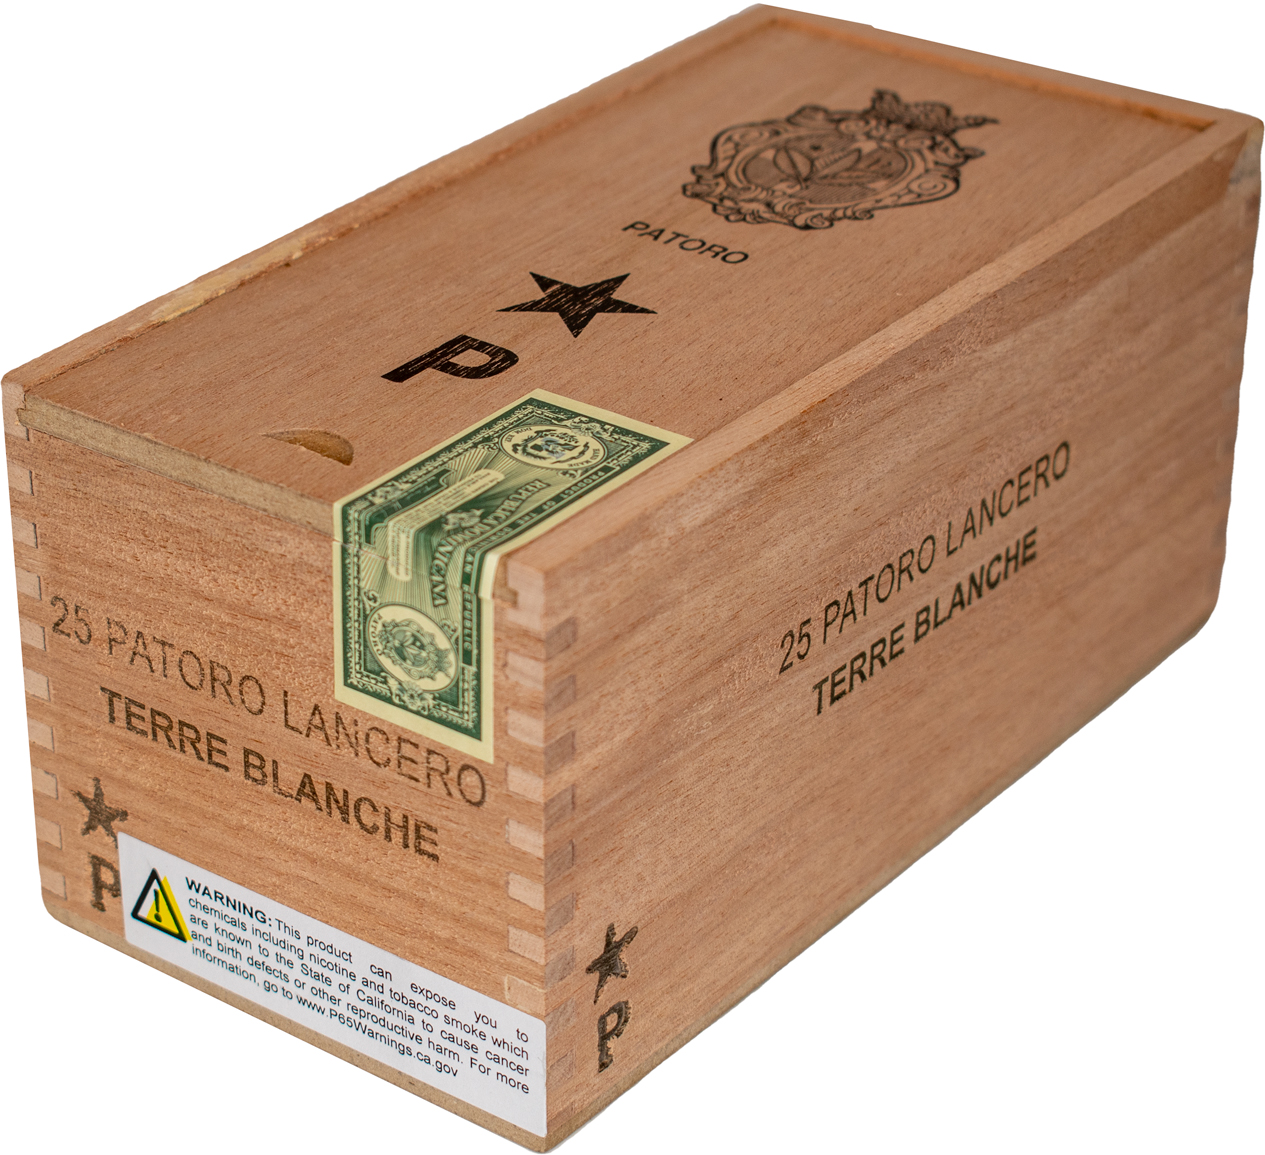 Extra Large Asylum Empty Wooden Cigar Box, Pack of 3